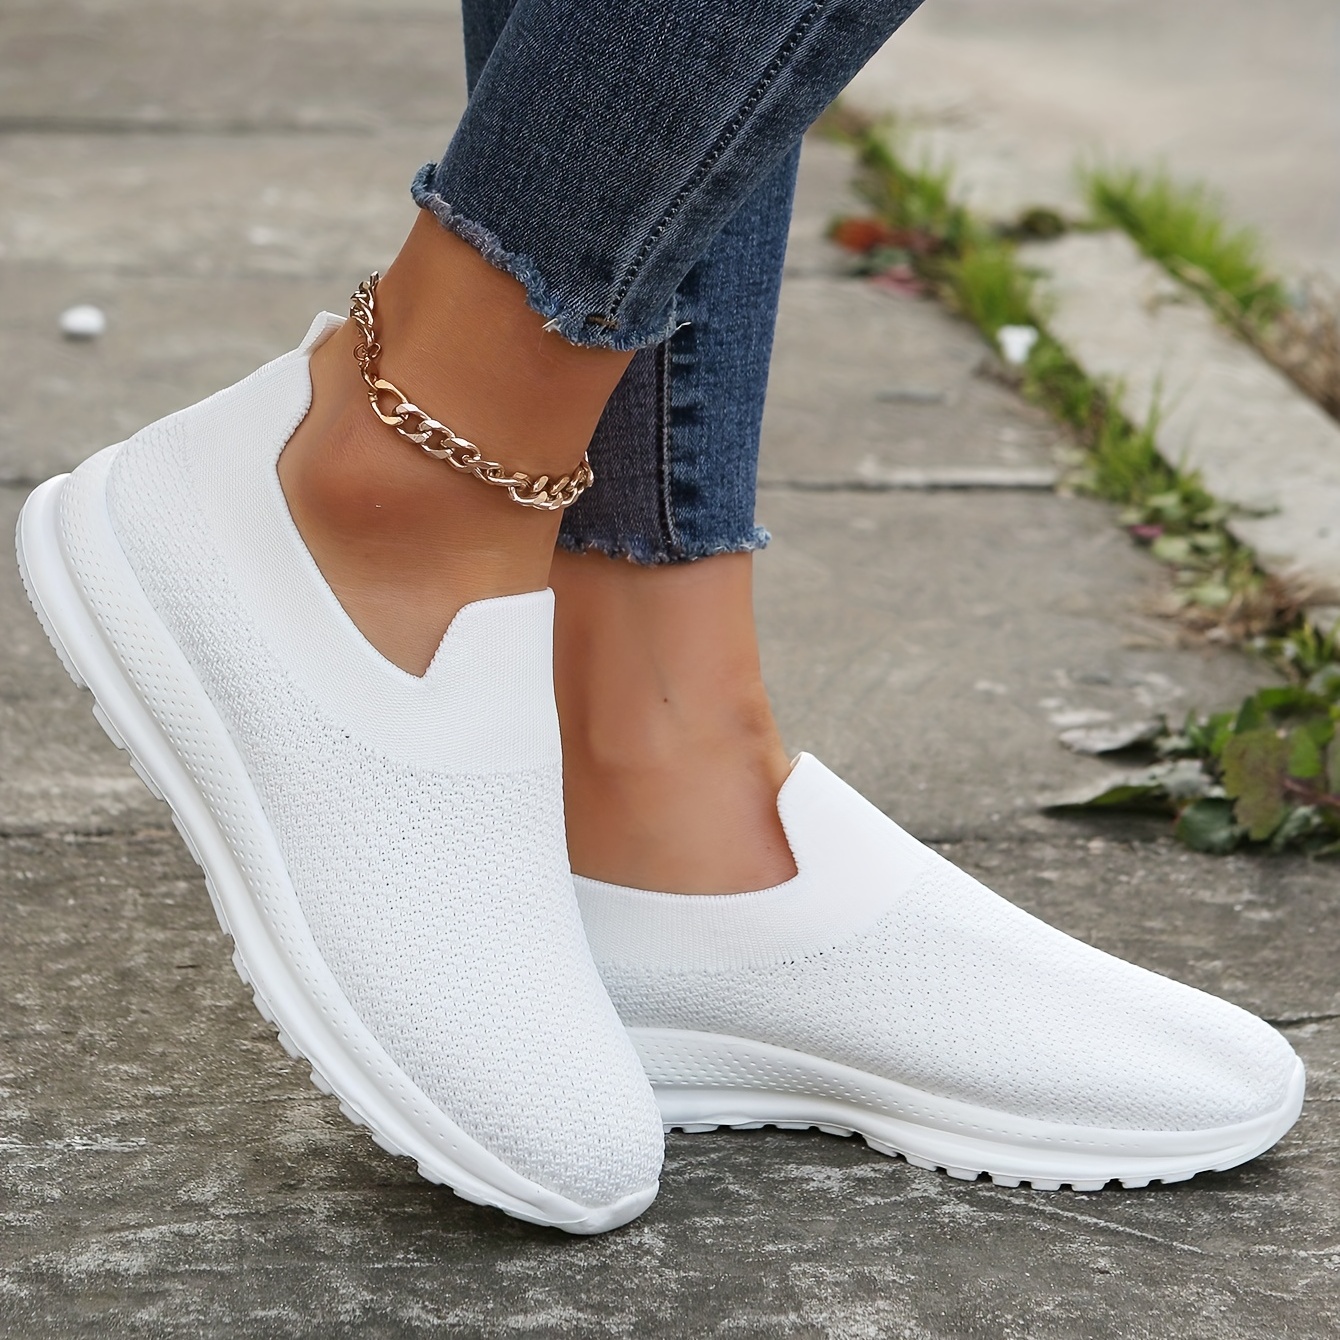 Zapatillas mujer casuales antideslizante zapatos para mujer-blanco BLWOENS